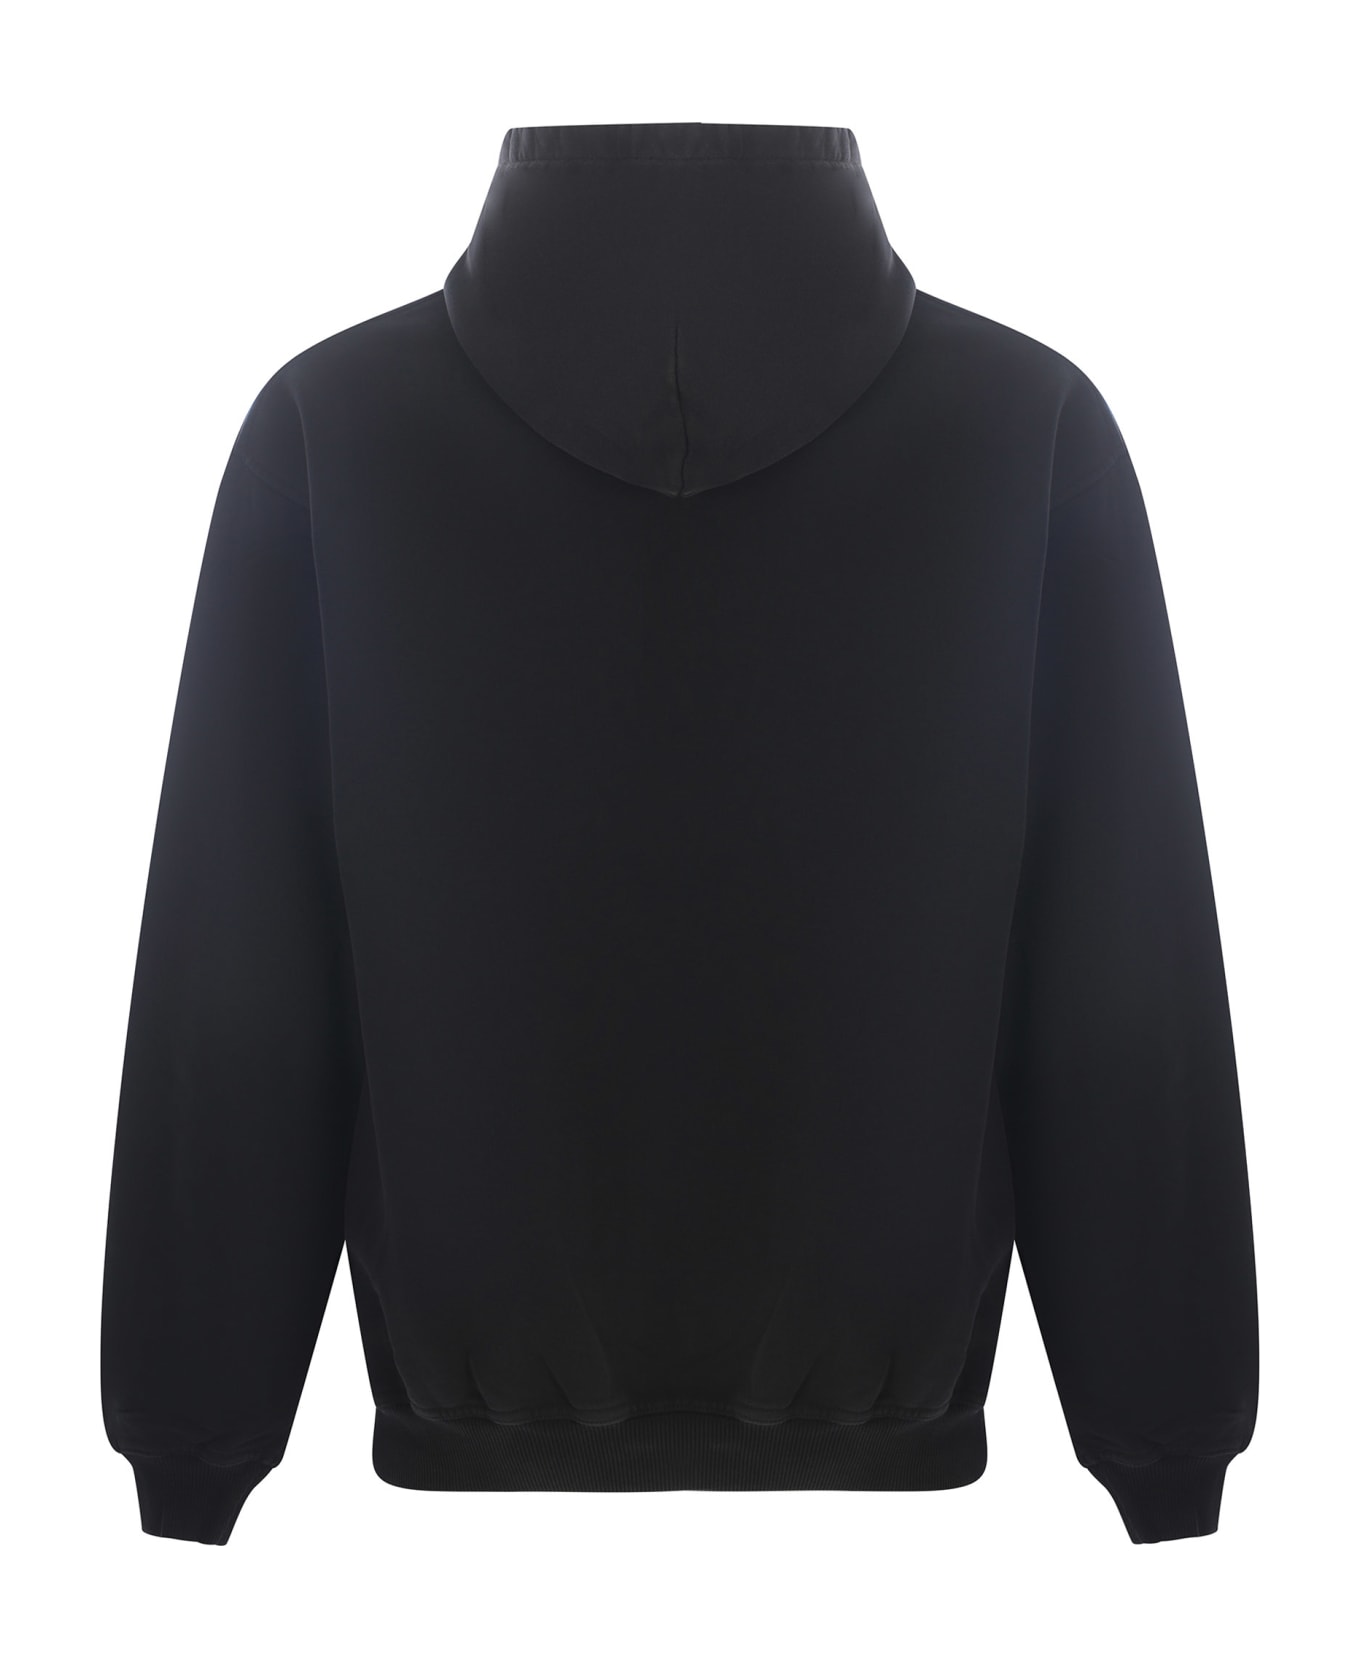 REPRESENT Hooded Sweatshirt Represent "thoroughbred" Made Of Cotton - Nero フリース